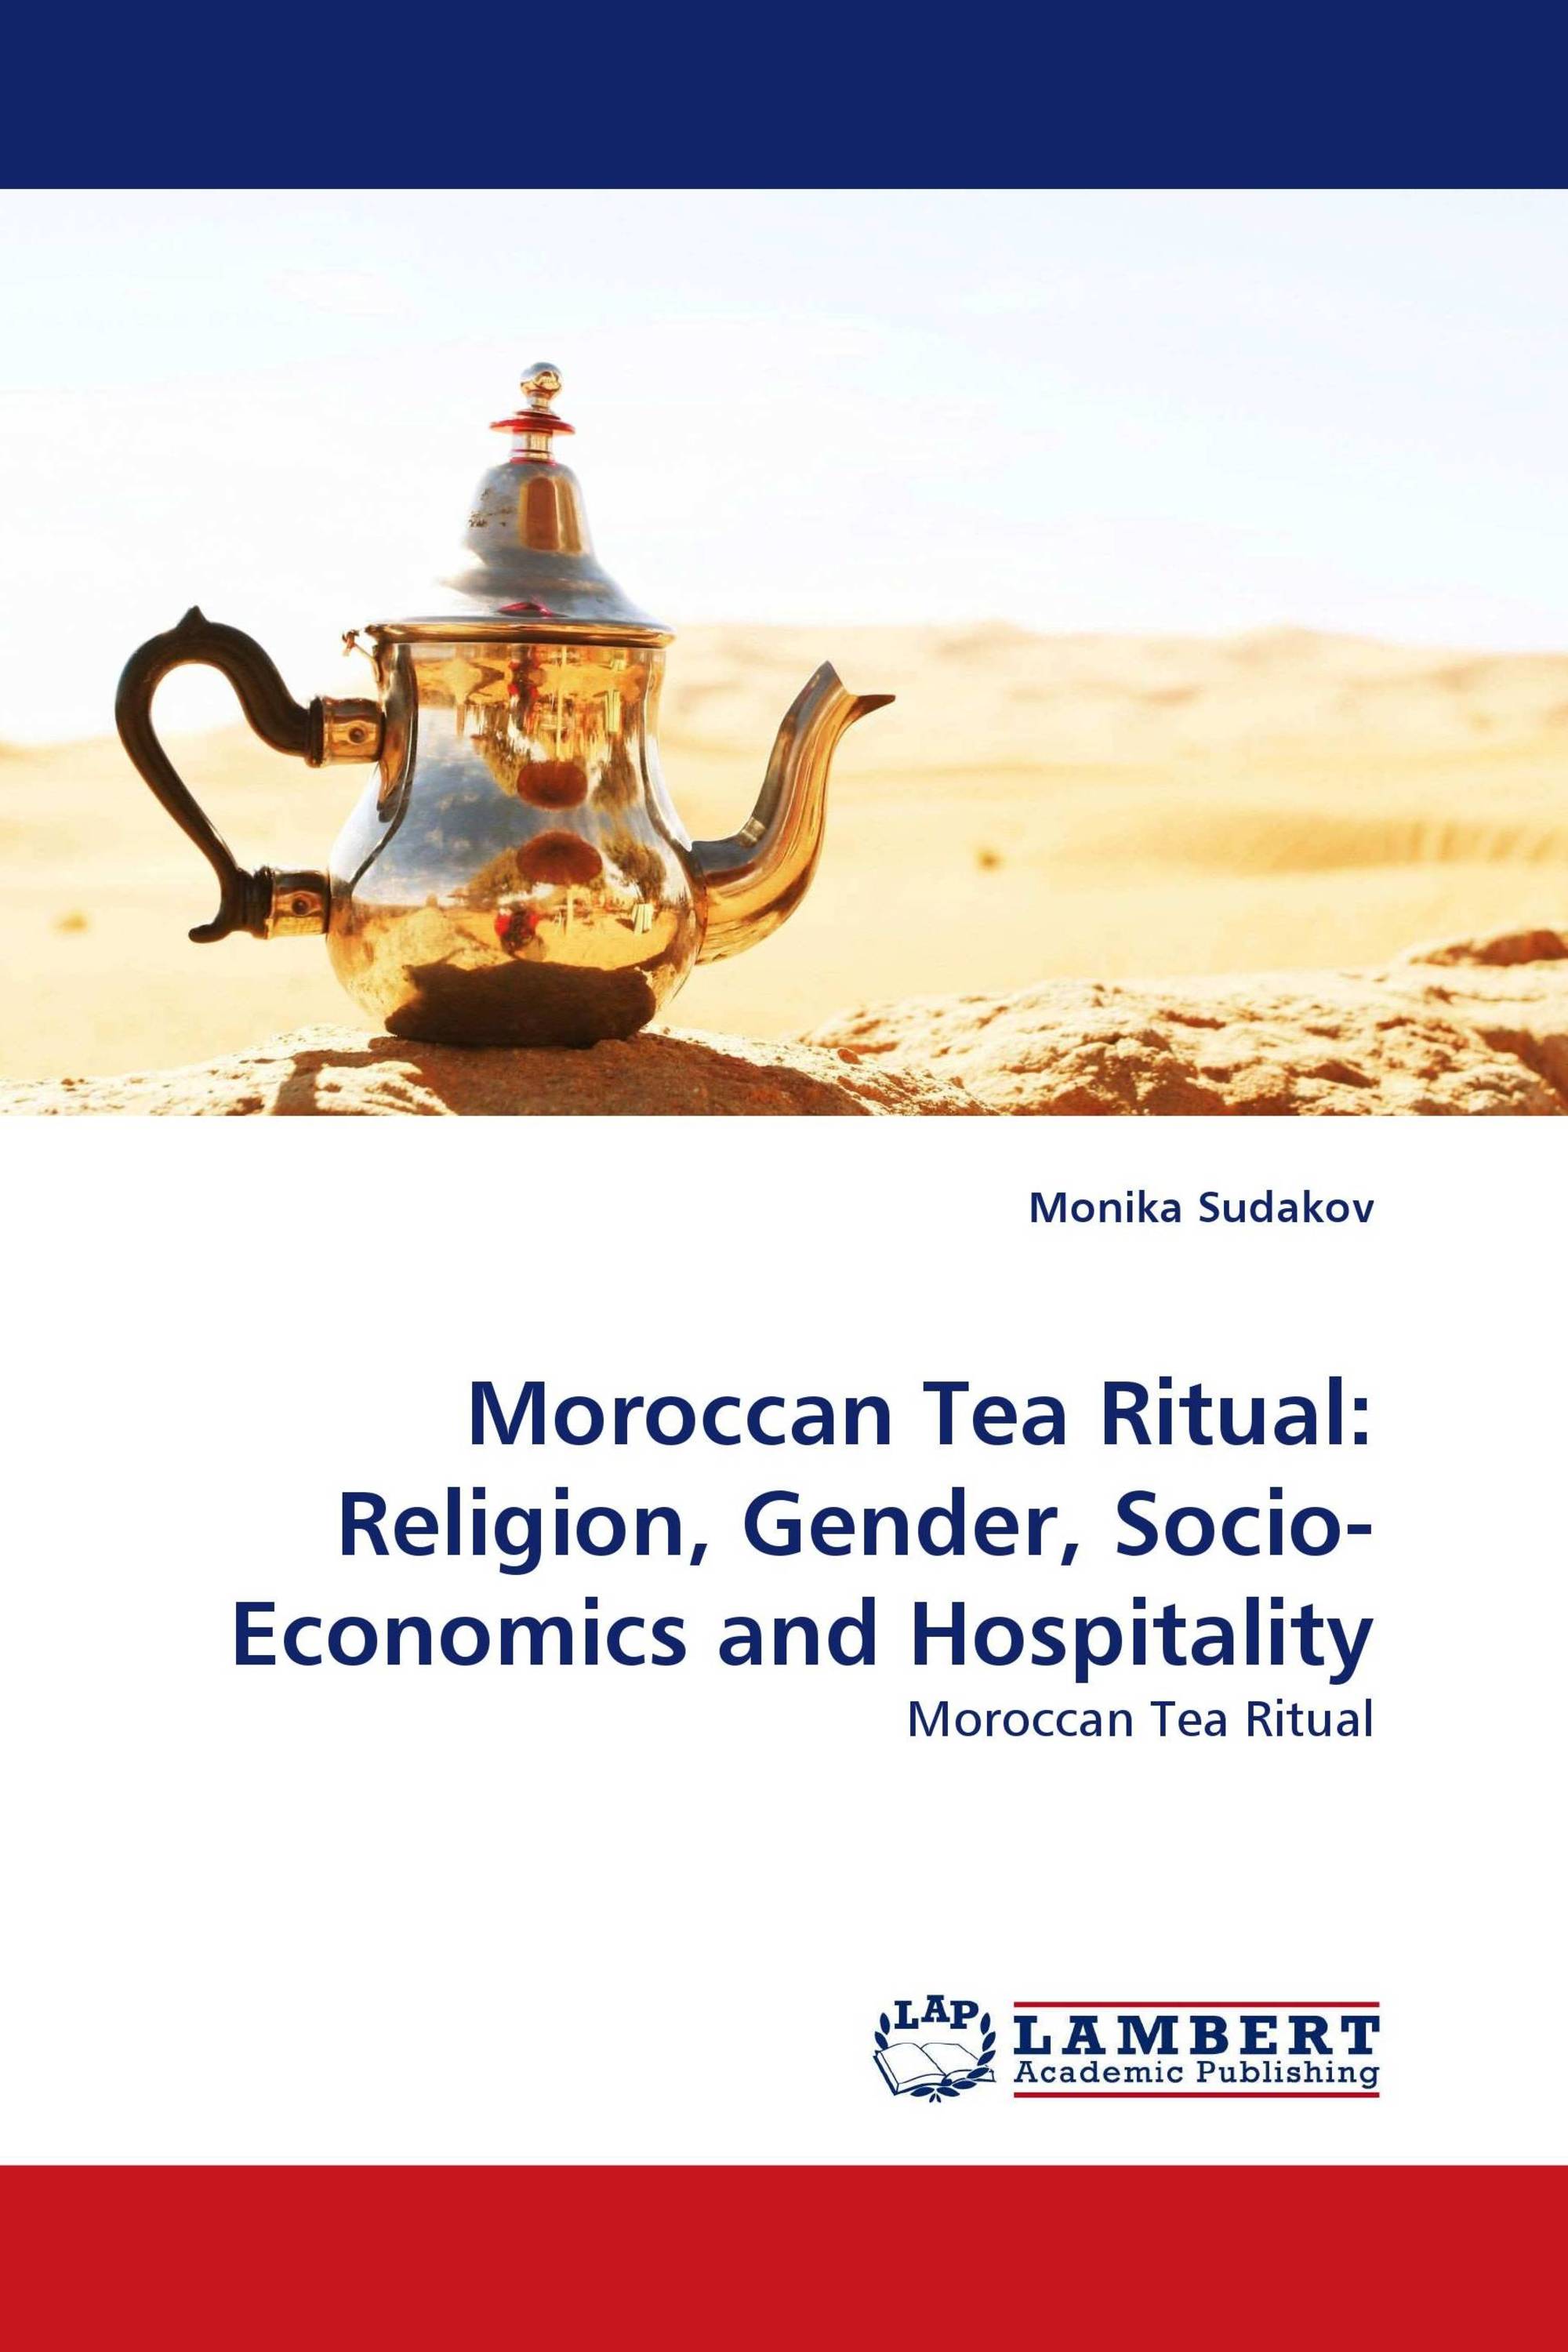 Moroccan Tea Ritual: Religion, Gender, Socio-Economics and Hospitality